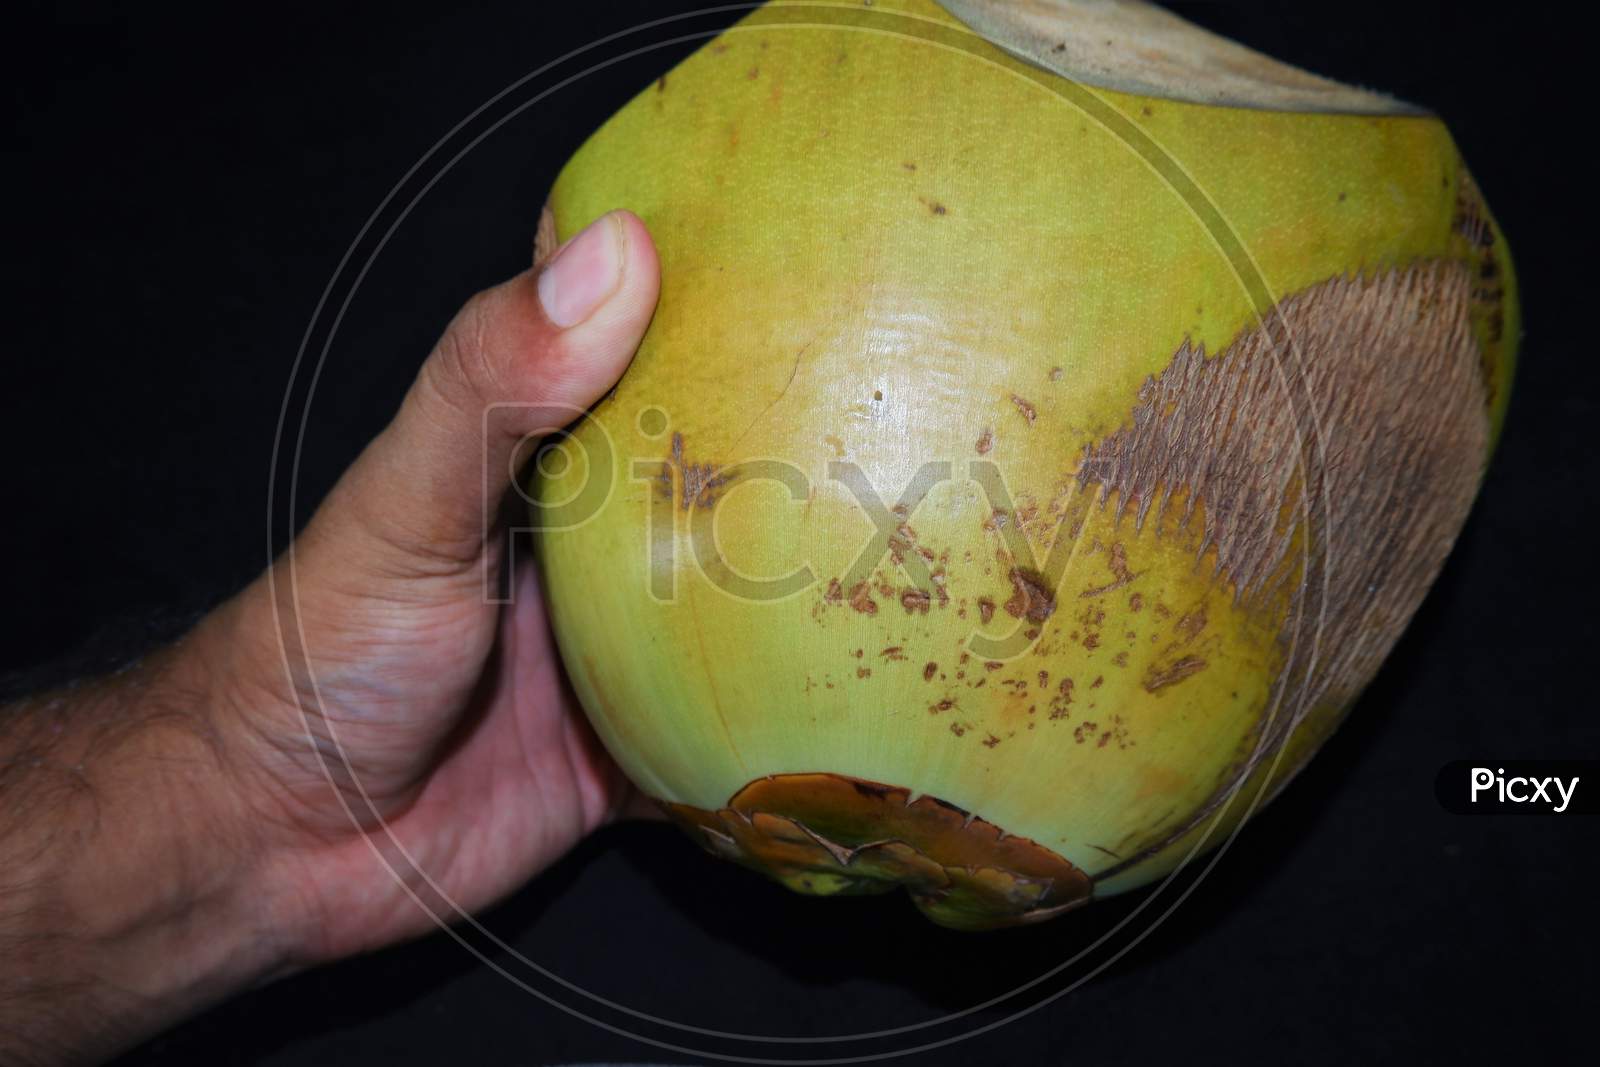 beautiful kerala tender coconut close up ,black background